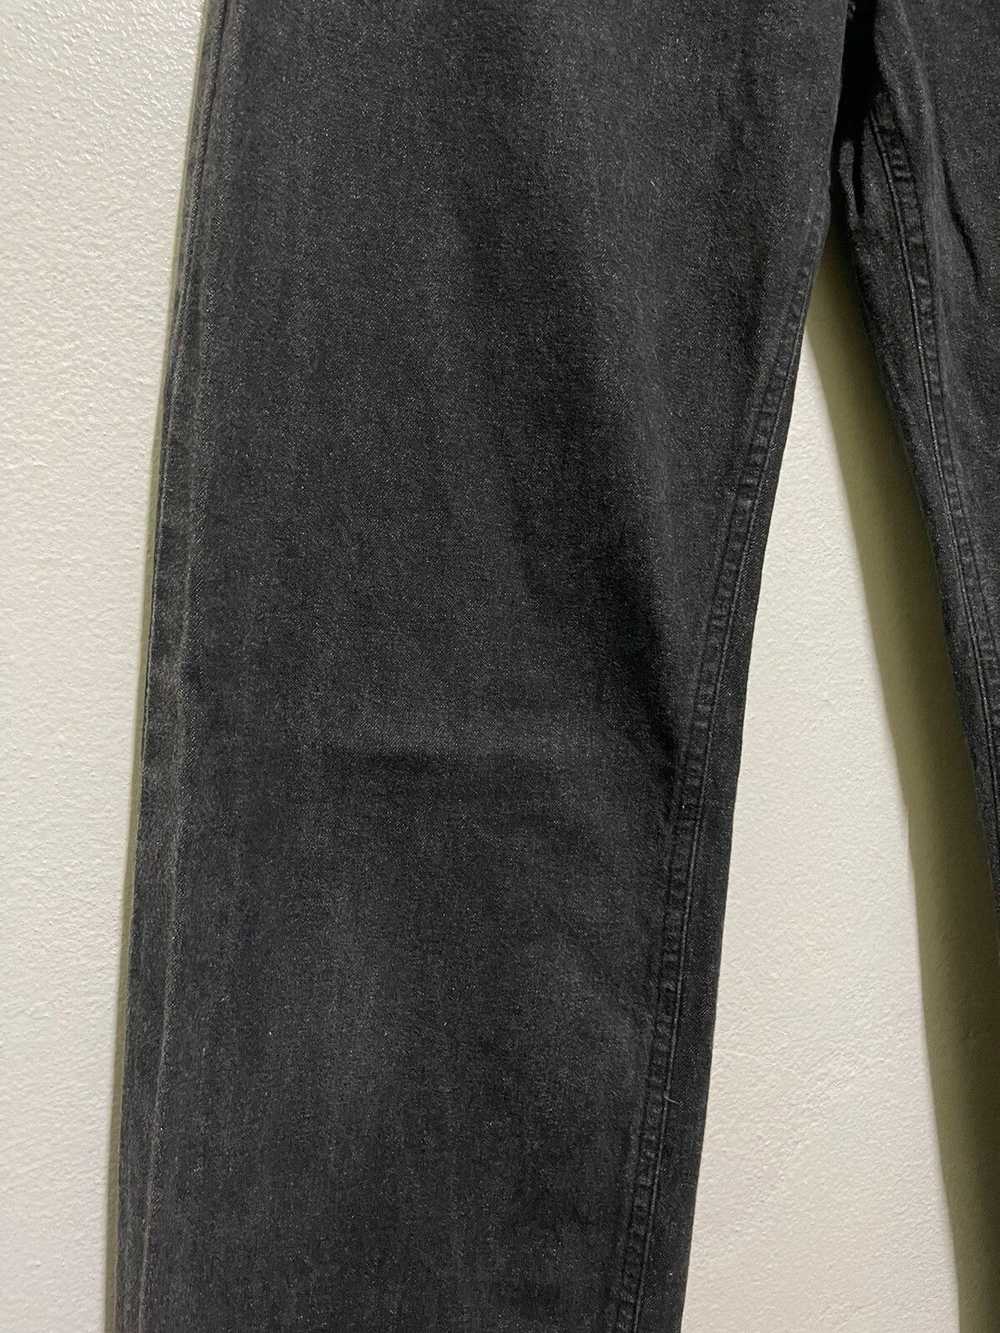 Japanese Brand Super Lovers Black Jeans - image 3